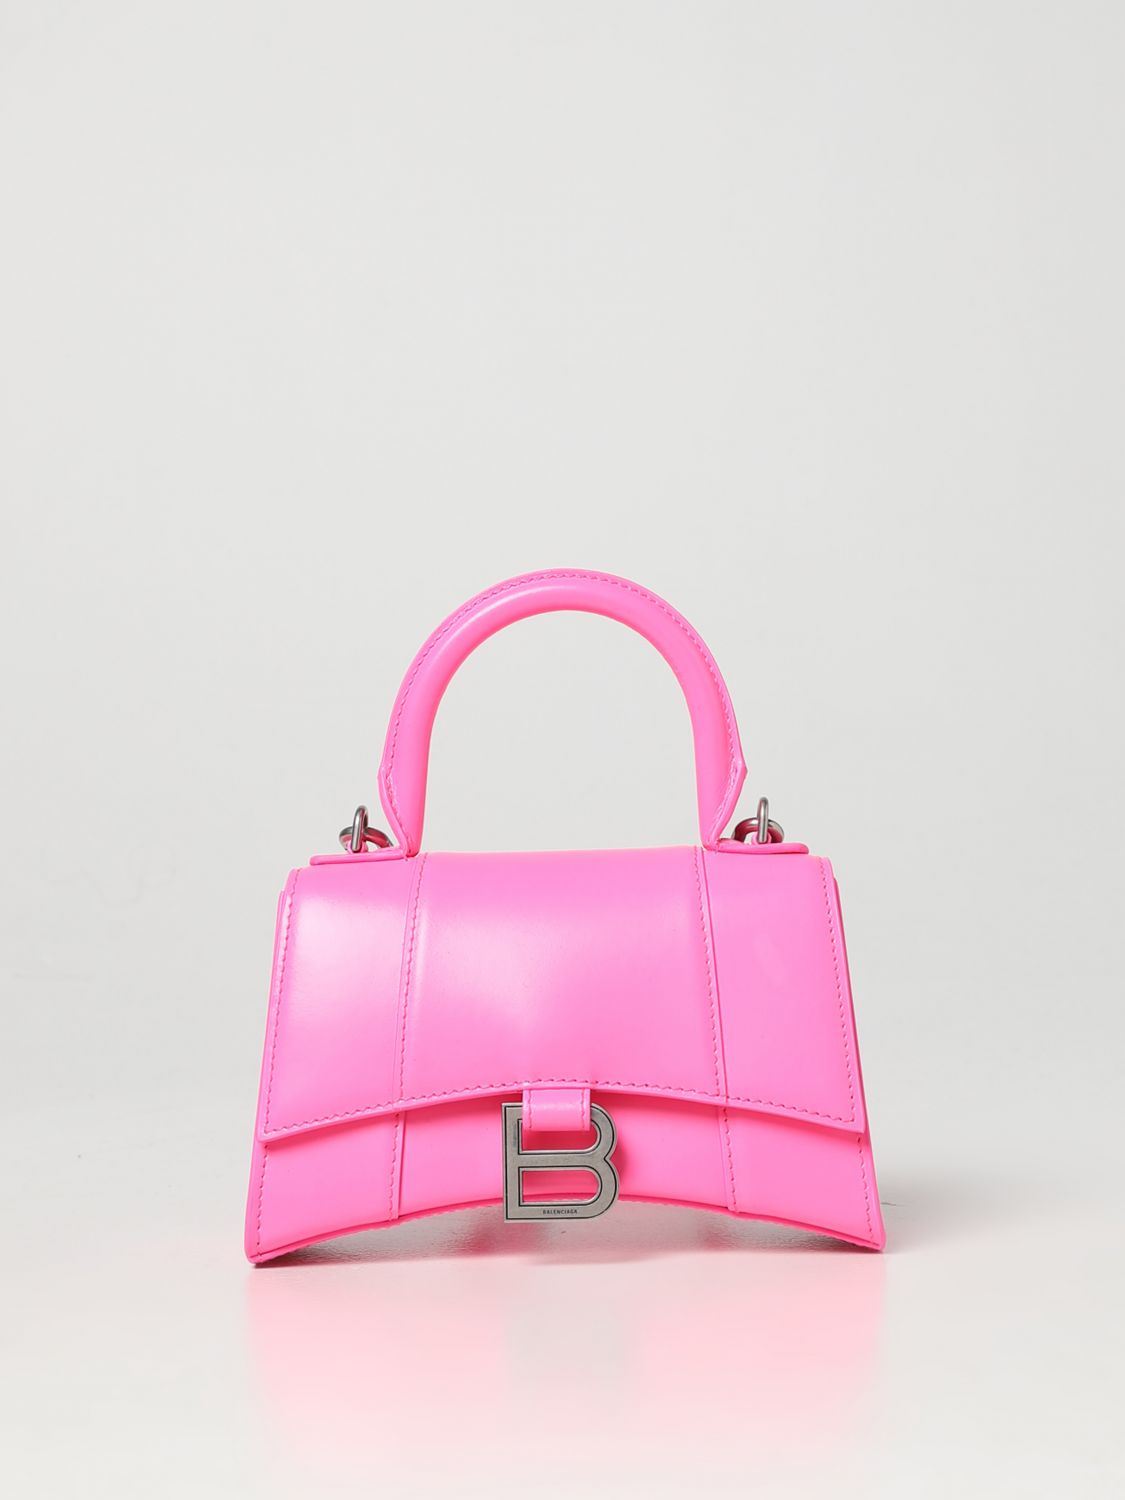 BALENCIAGA: Hourglass bag in leather - Pink | Balenciaga mini bag 5928331JHVY online on